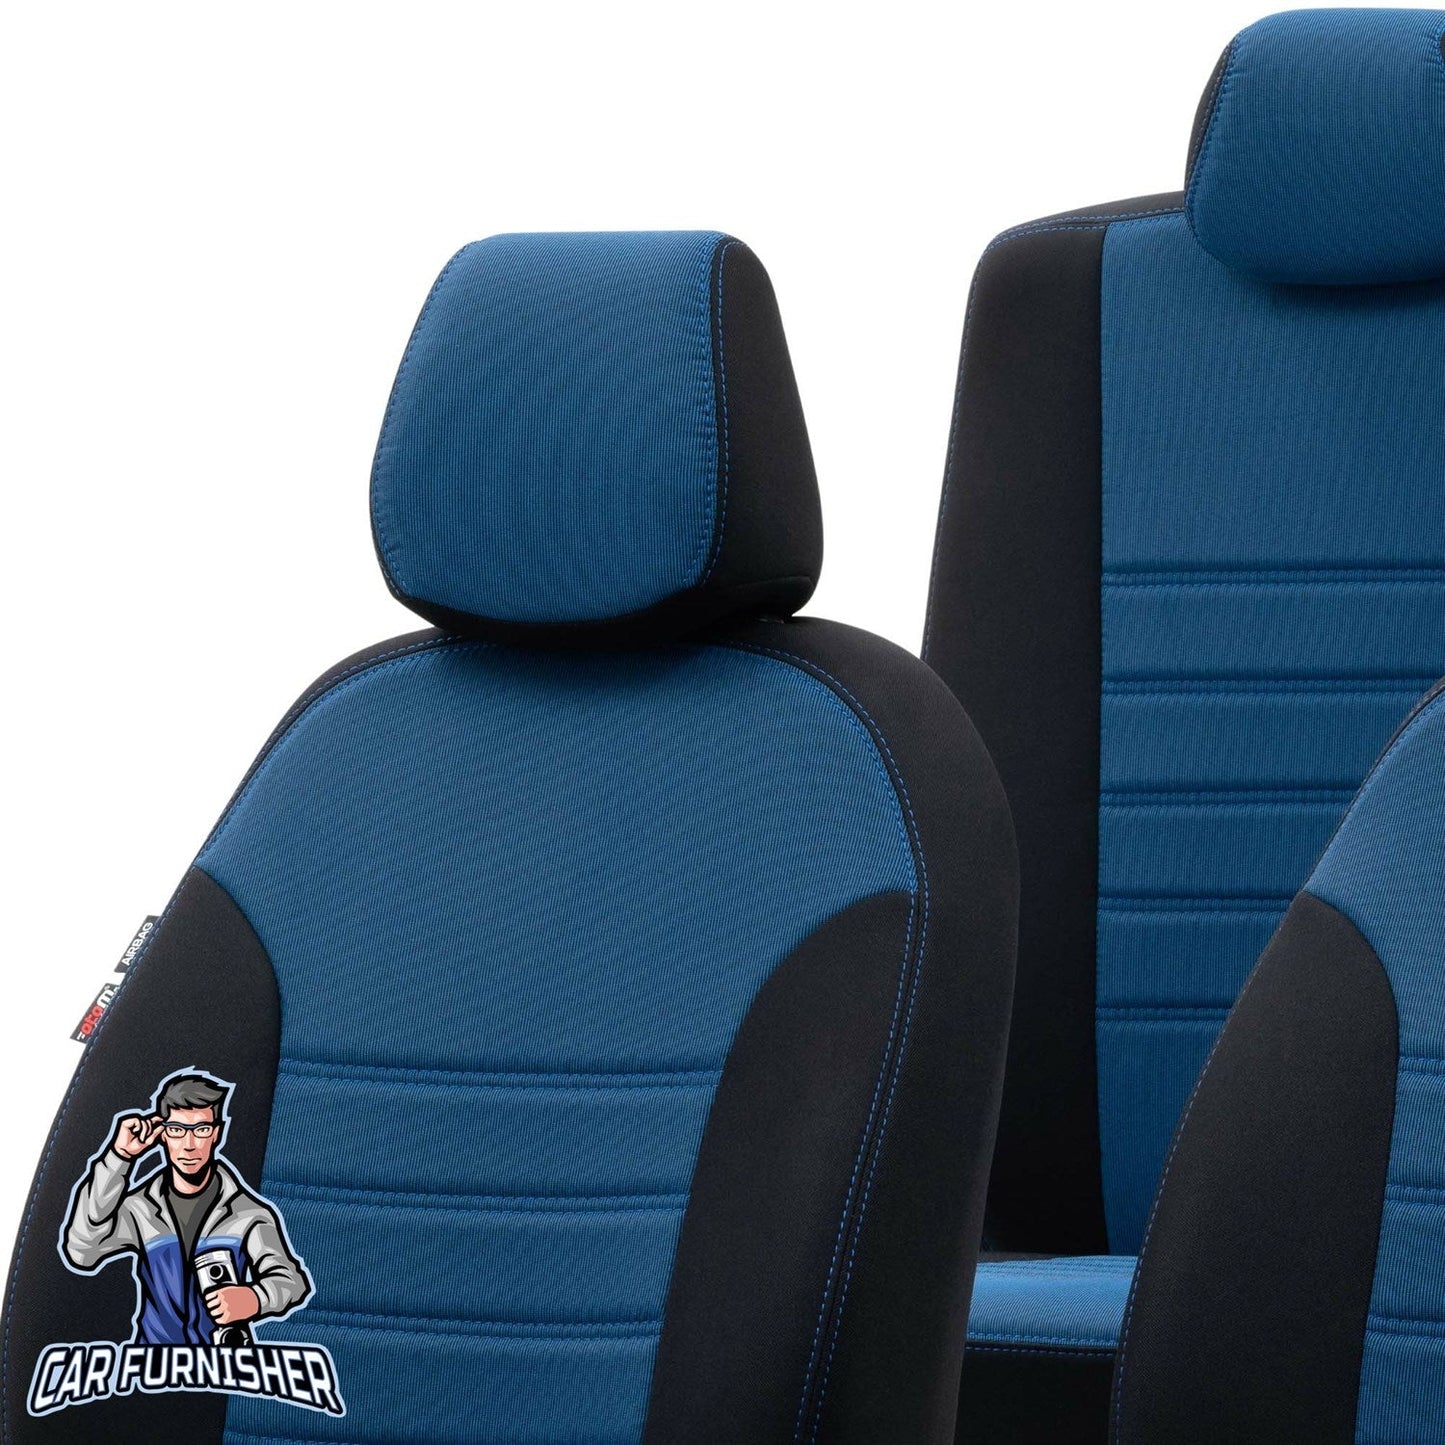 Toyota CHR Seat Cover Original Jacquard Design Dark Beige Jacquard Fabric